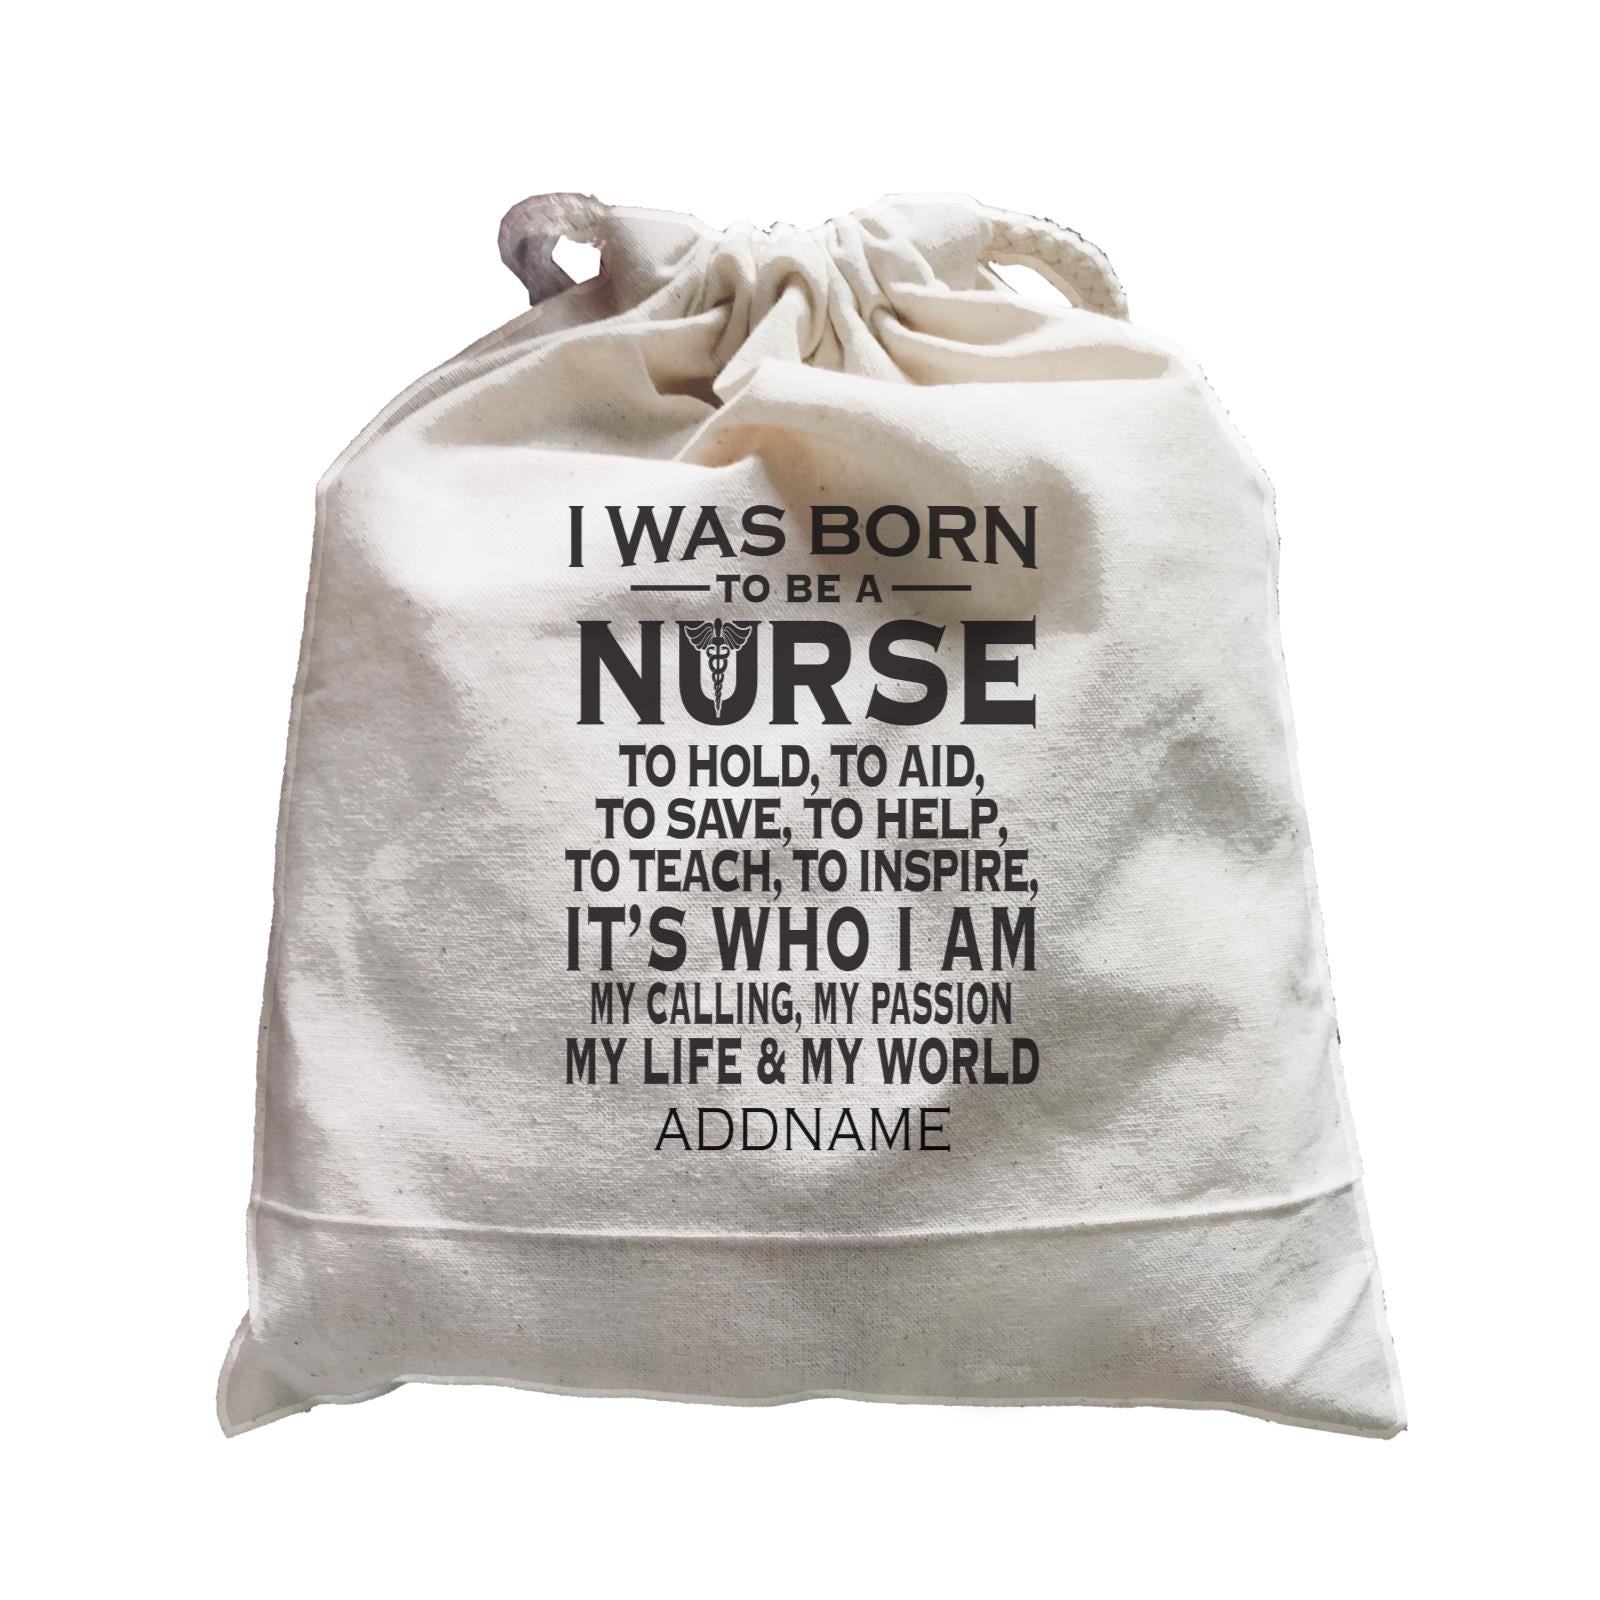 Nurse QuotesI Was Born To Be A Nurse Addname Satchel